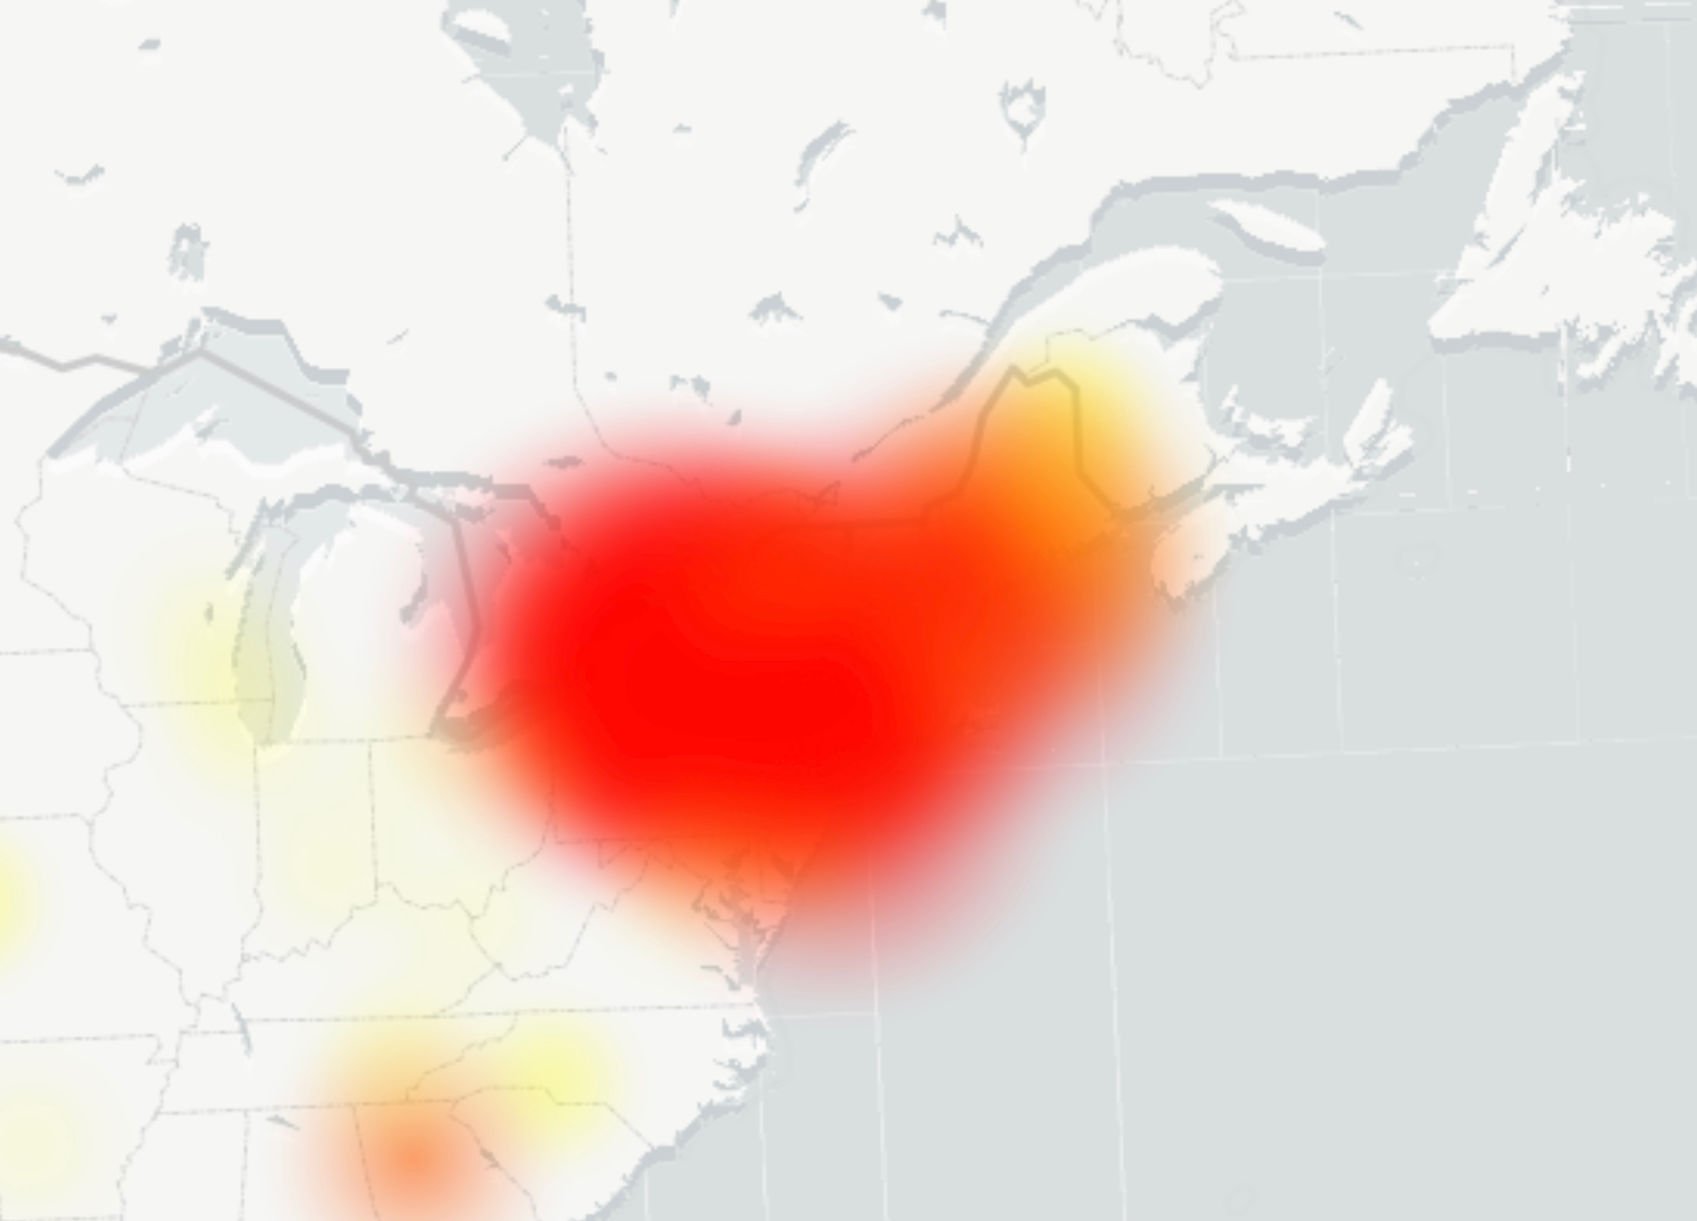 spectrum internet outage